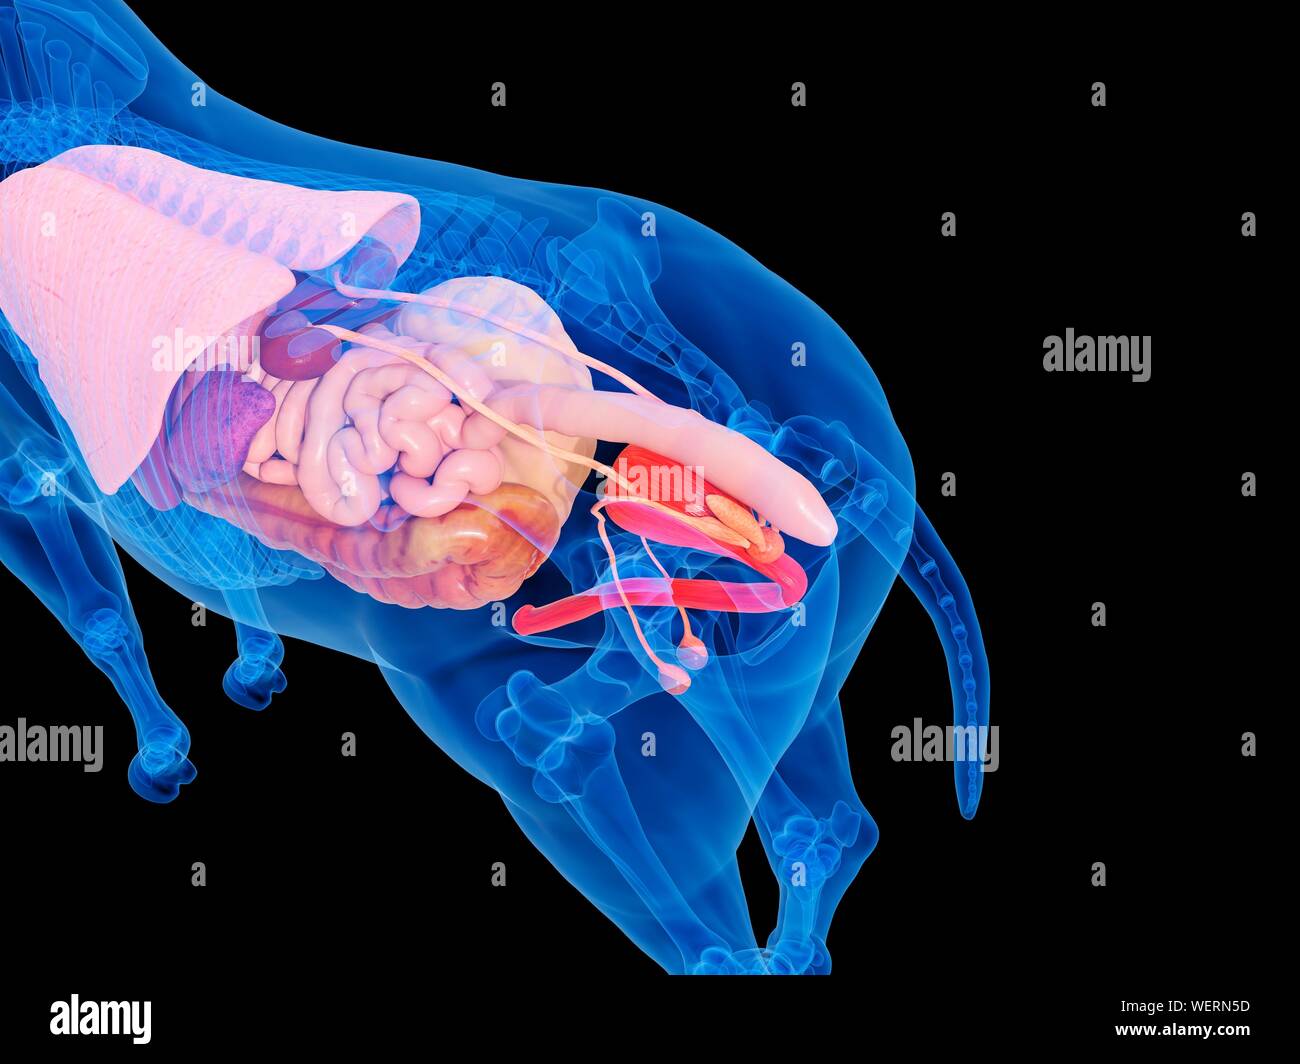 Horse anatomy, illustration Stock Photo